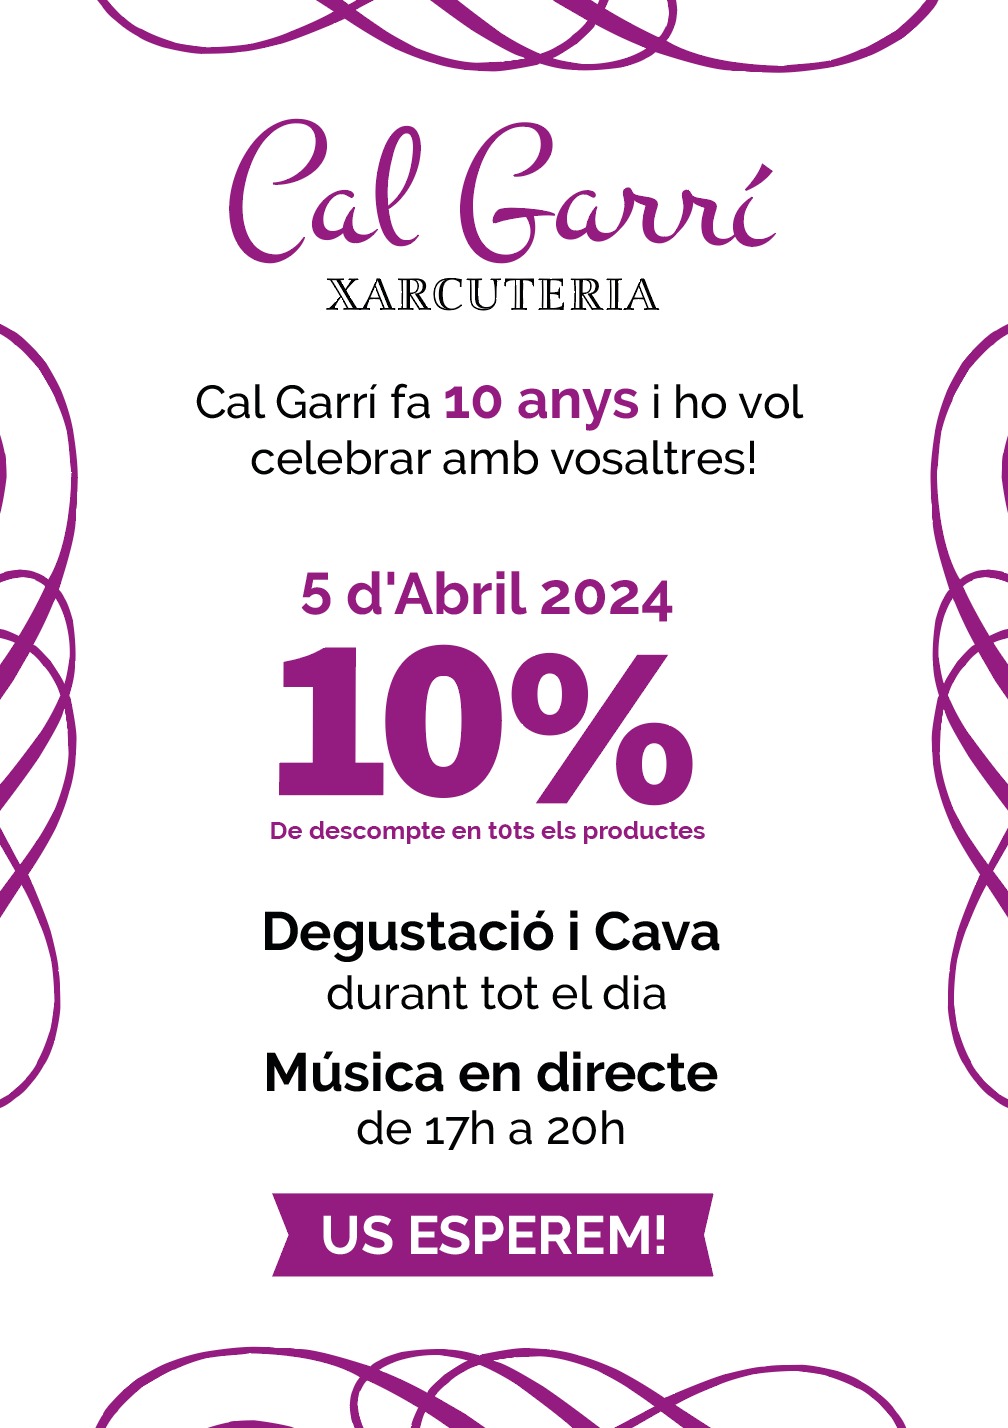 La Xarcuteria Can Garri celebra 10 anys i et convida a celebrar-ho!